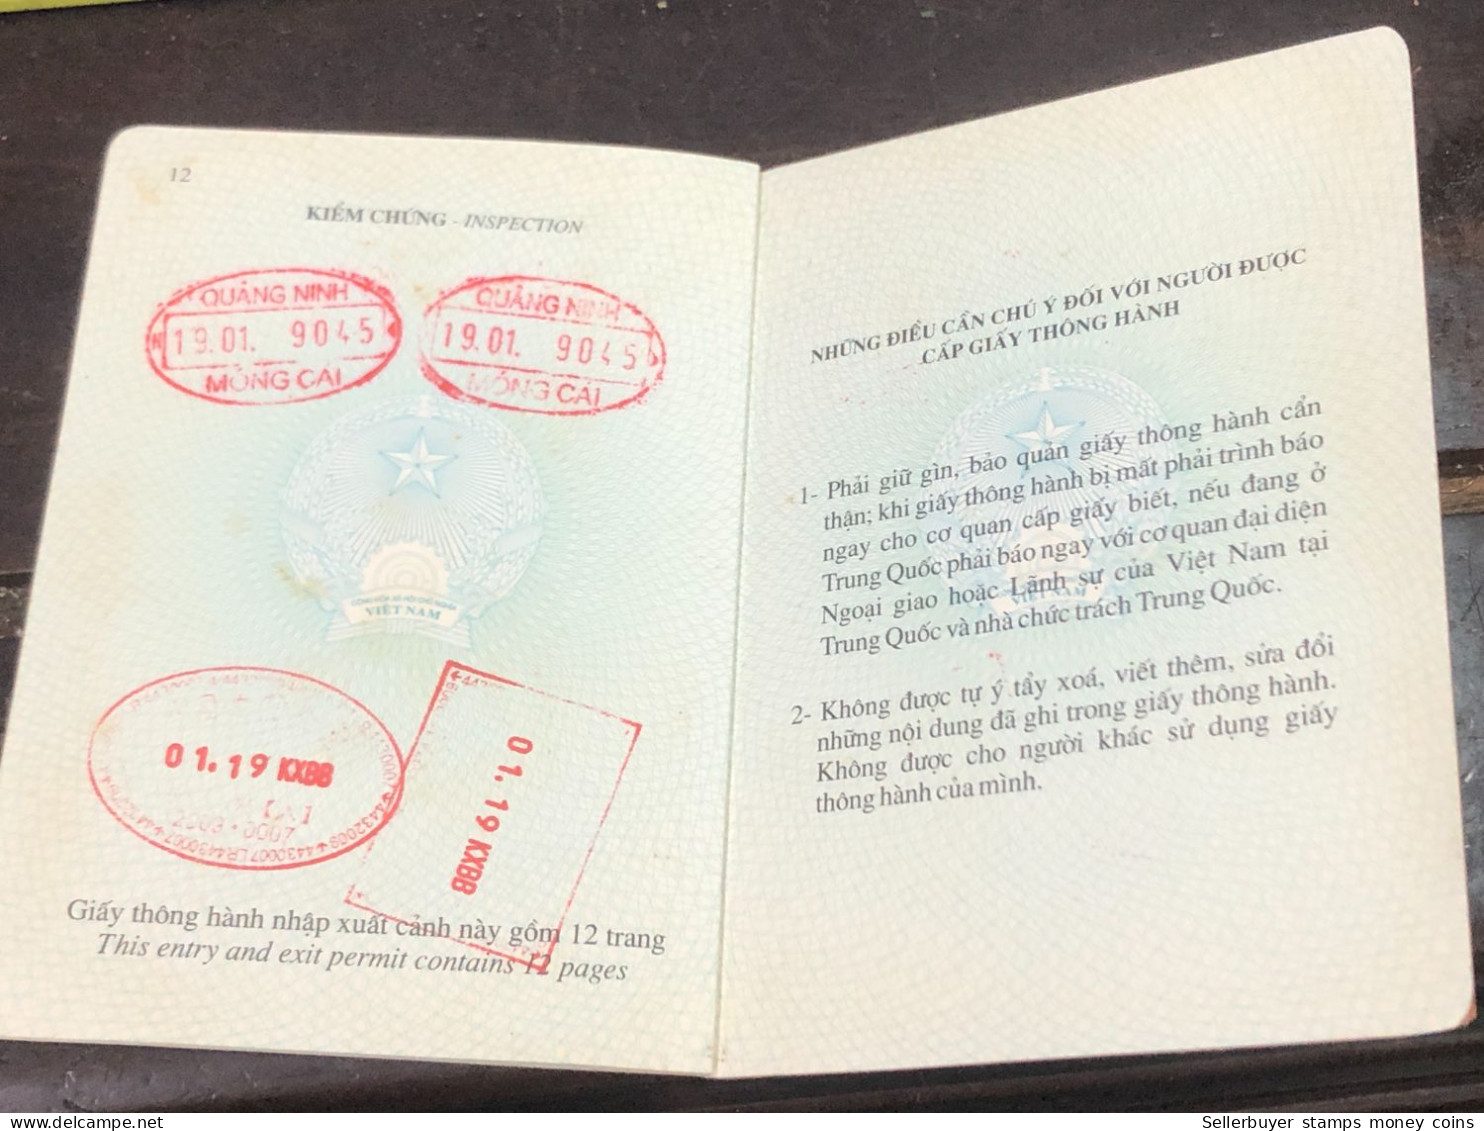 VIET NAM -OLD-GIAY THONG HANH XUAT CANH-ID PASSPORT-name-NGUYEN QUOC TE-2009-1pcs Book - Verzamelingen